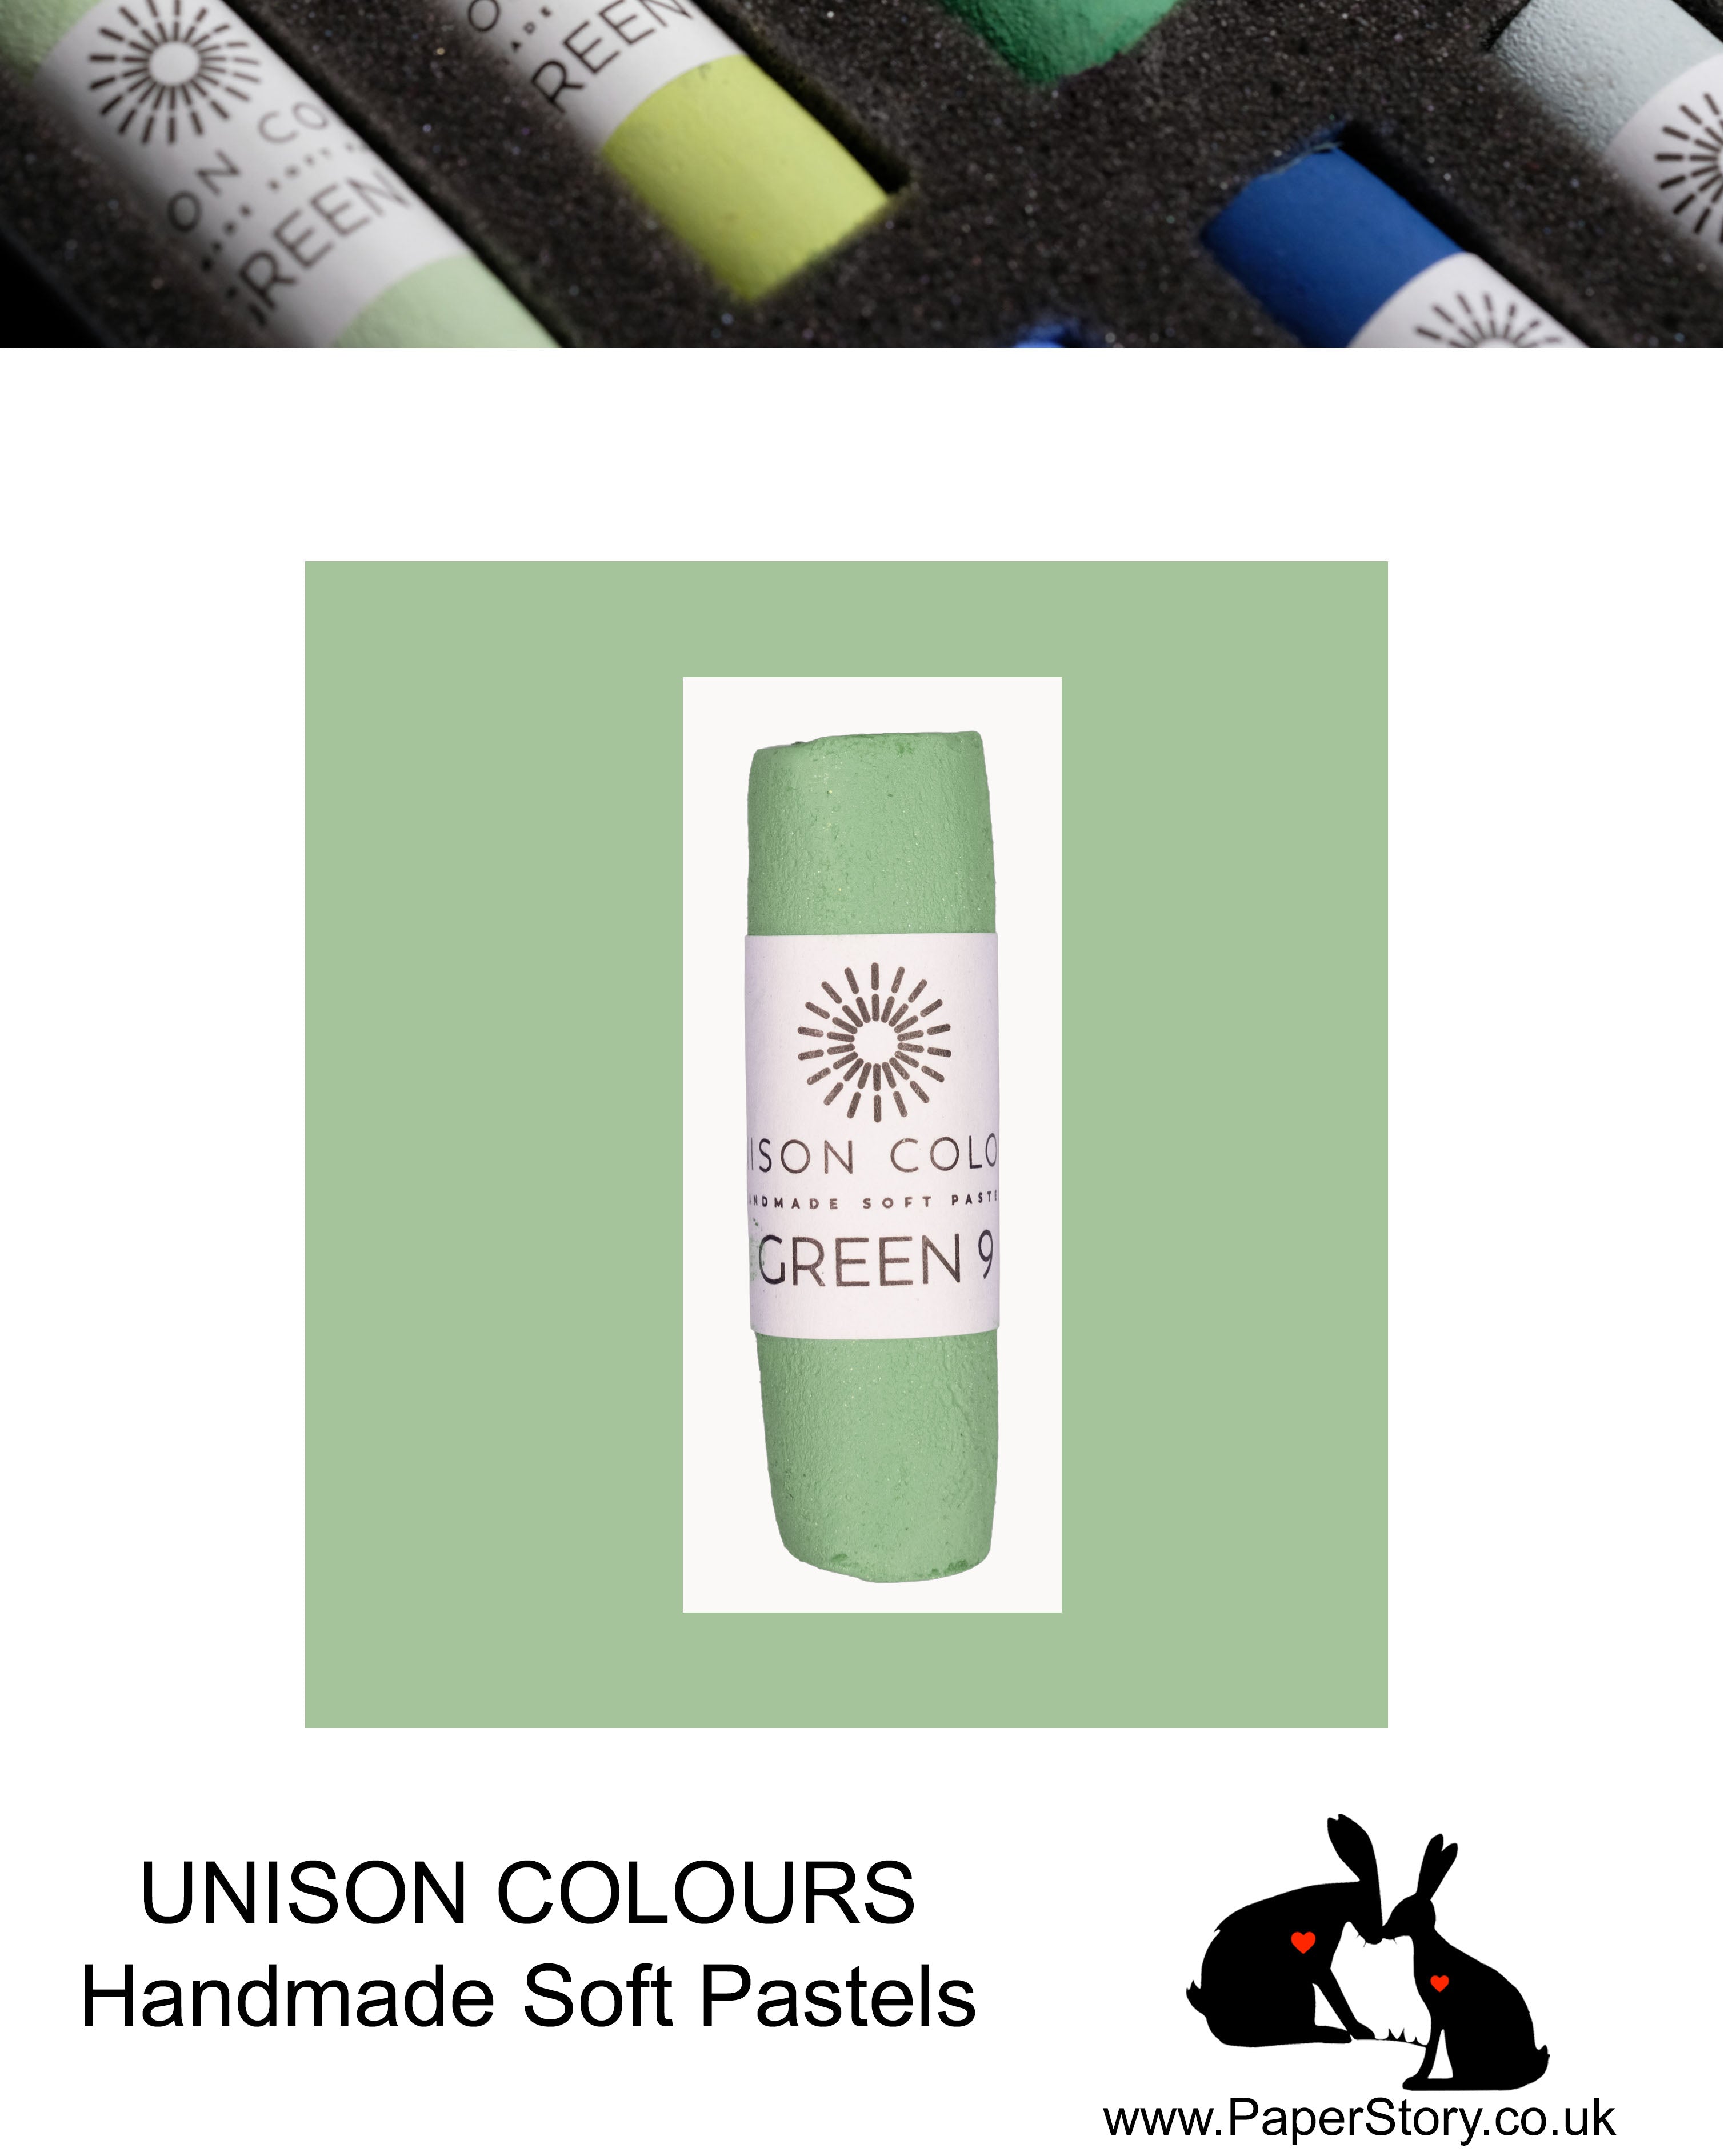 Unison Colour Handmade Soft Pastels Green 9 - Size Regular